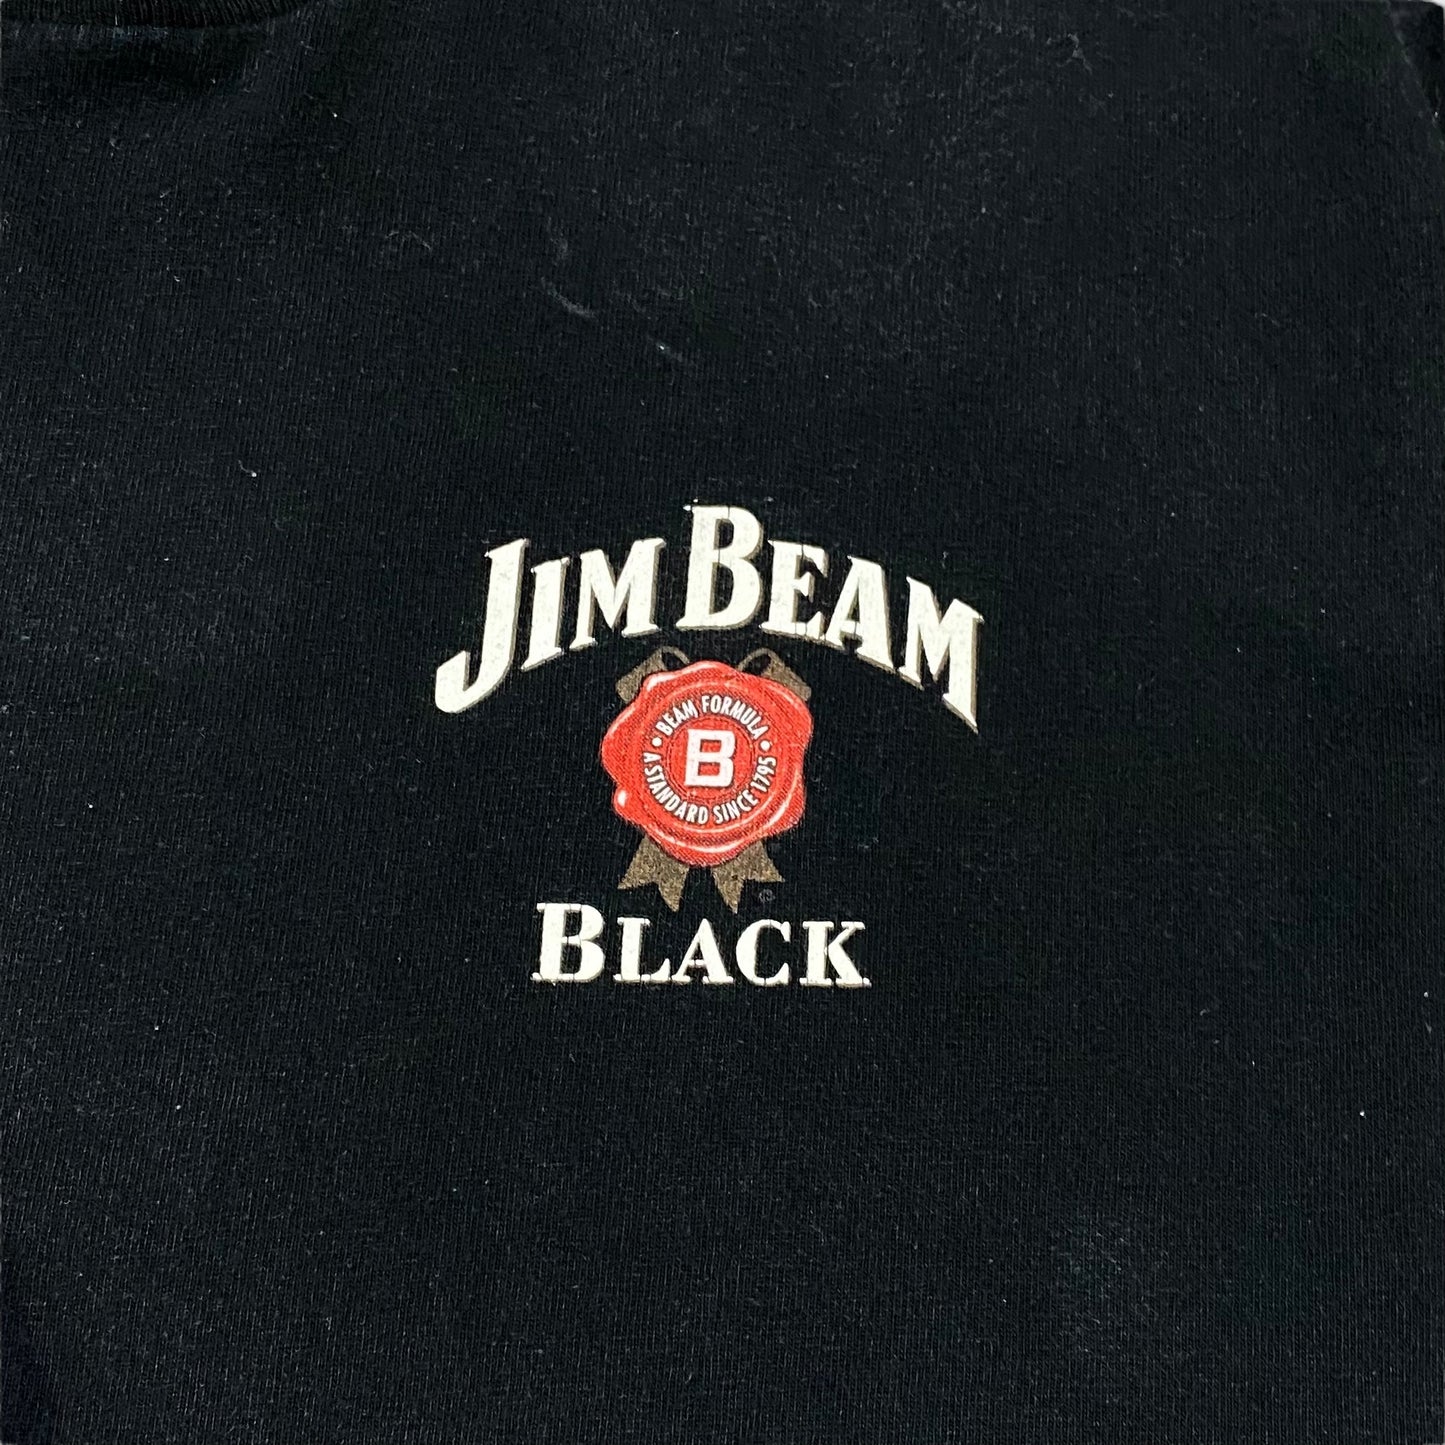 "JIM BEAM" Company t-shirt